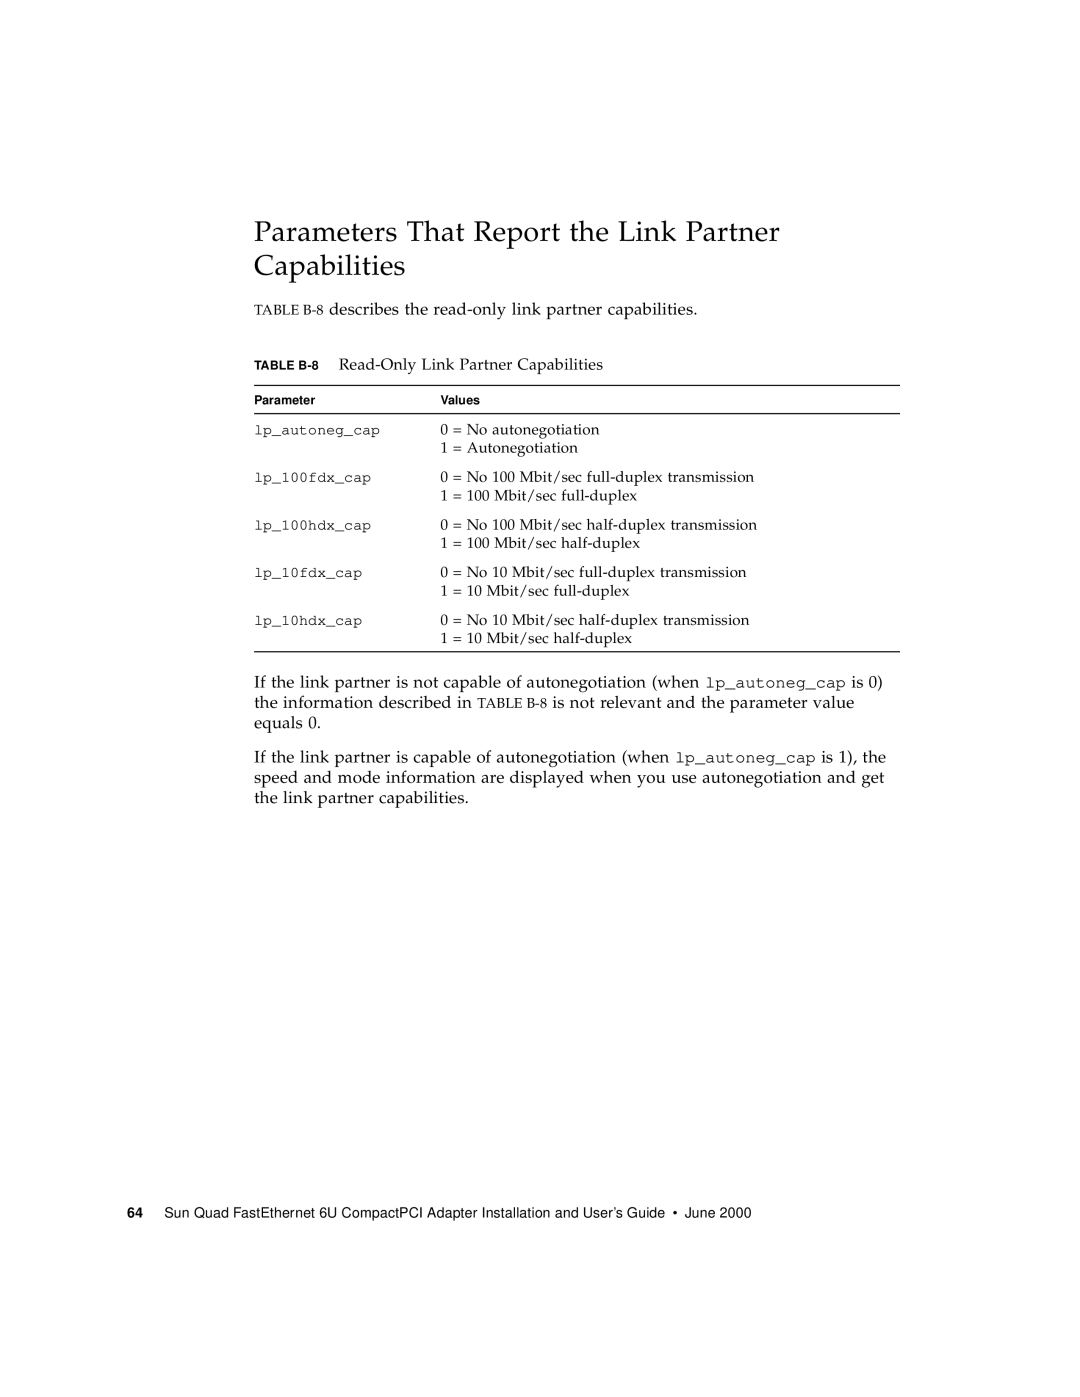 Sun Microsystems 6U manual Parameters That Report the Link Partner Capabilities 